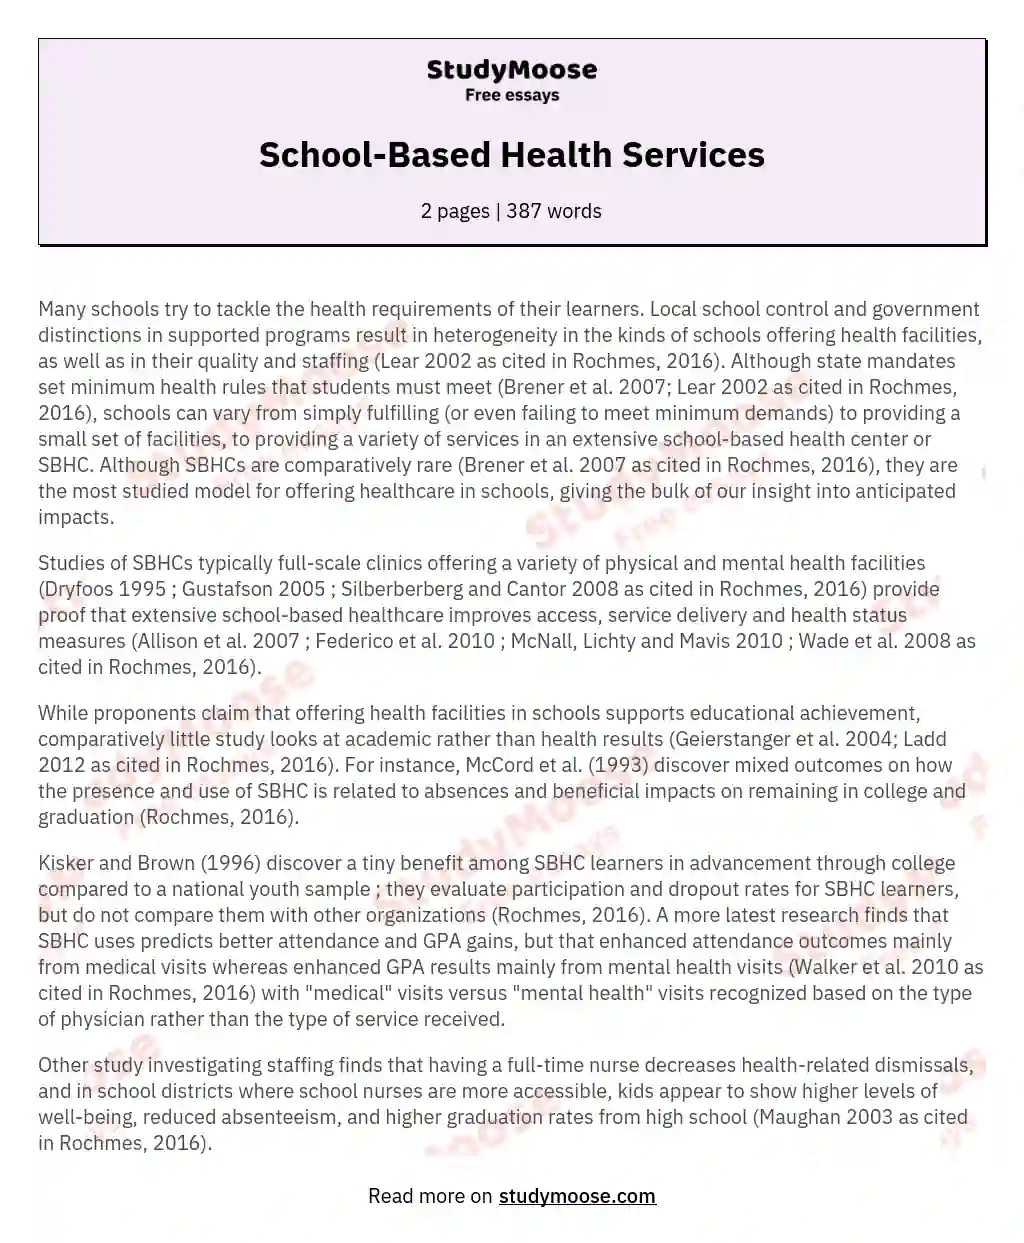 School-Based Health Services essay